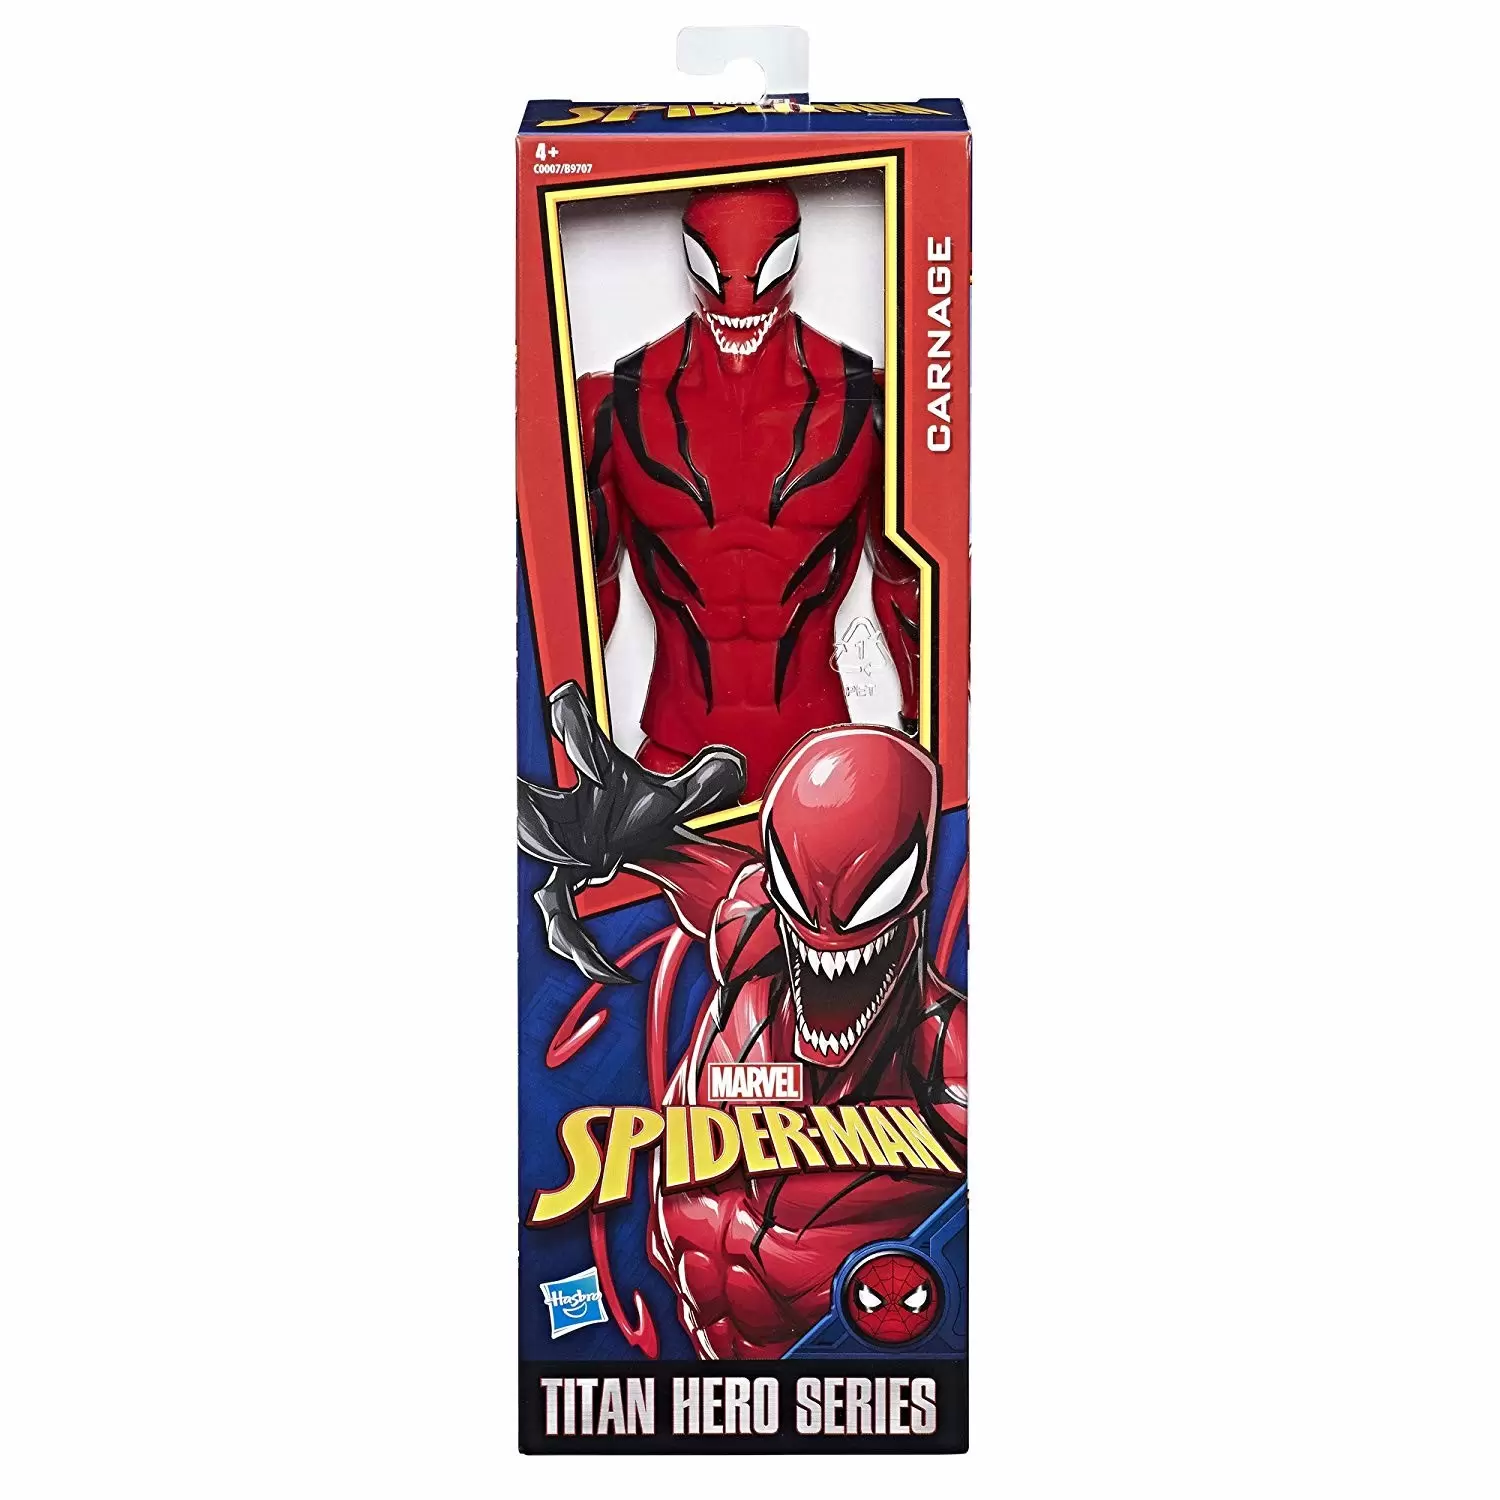 Spider-Man - Carnage - Titan Hero Series action figure